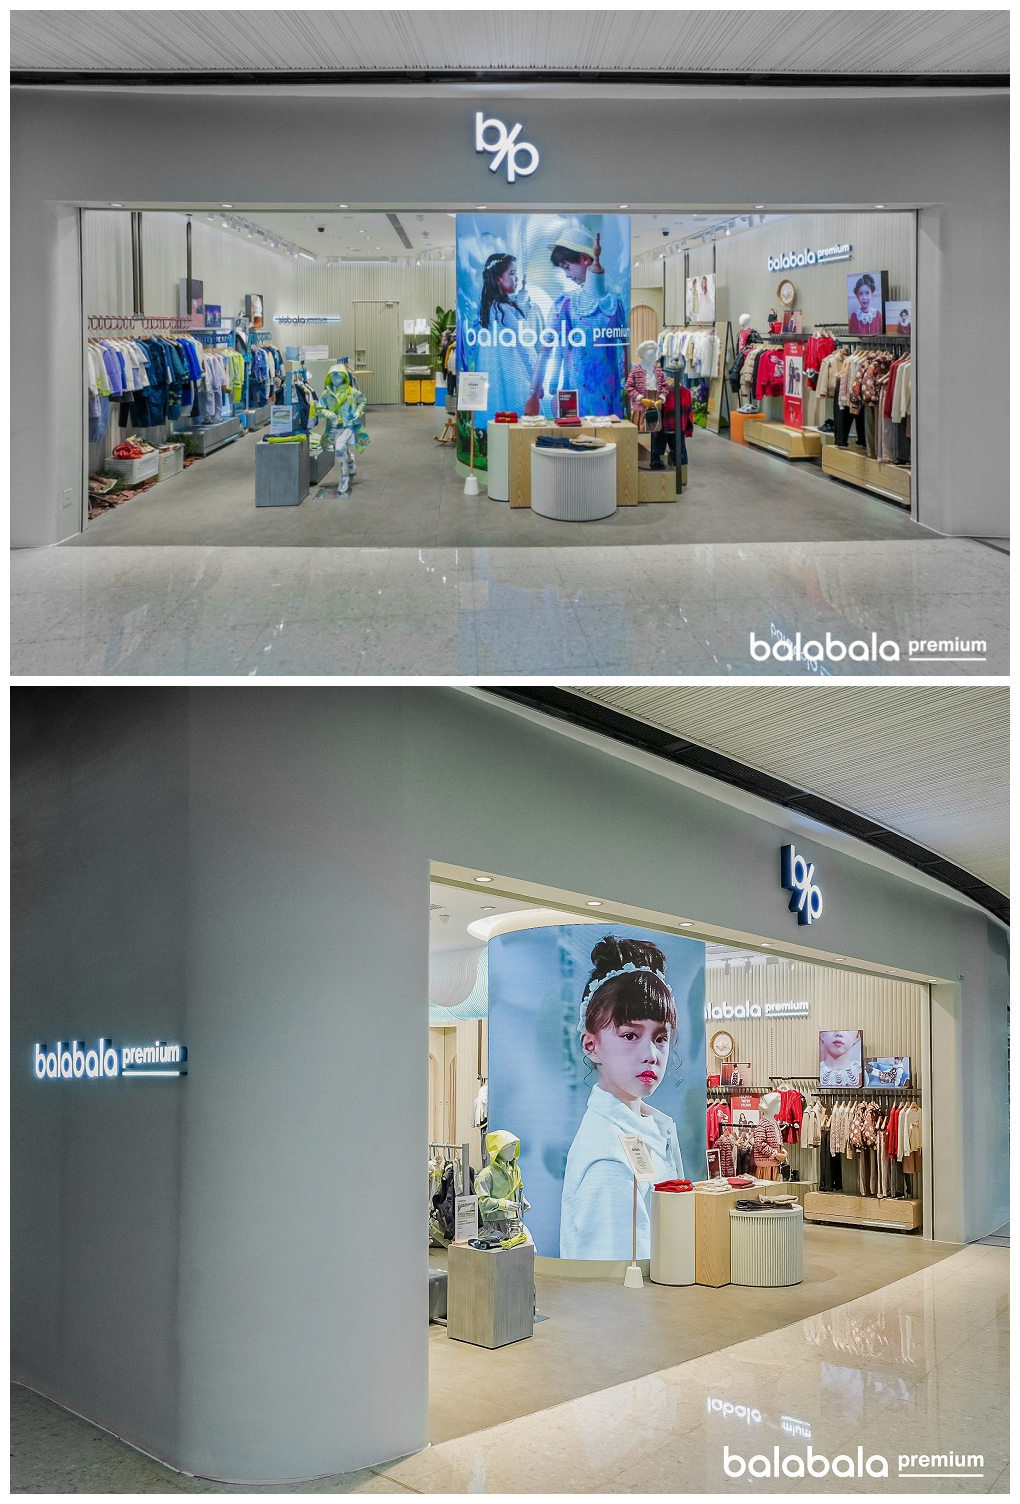 balabala premium华南首店亮相广州高端商场IGC 加速高端童装赛道布局